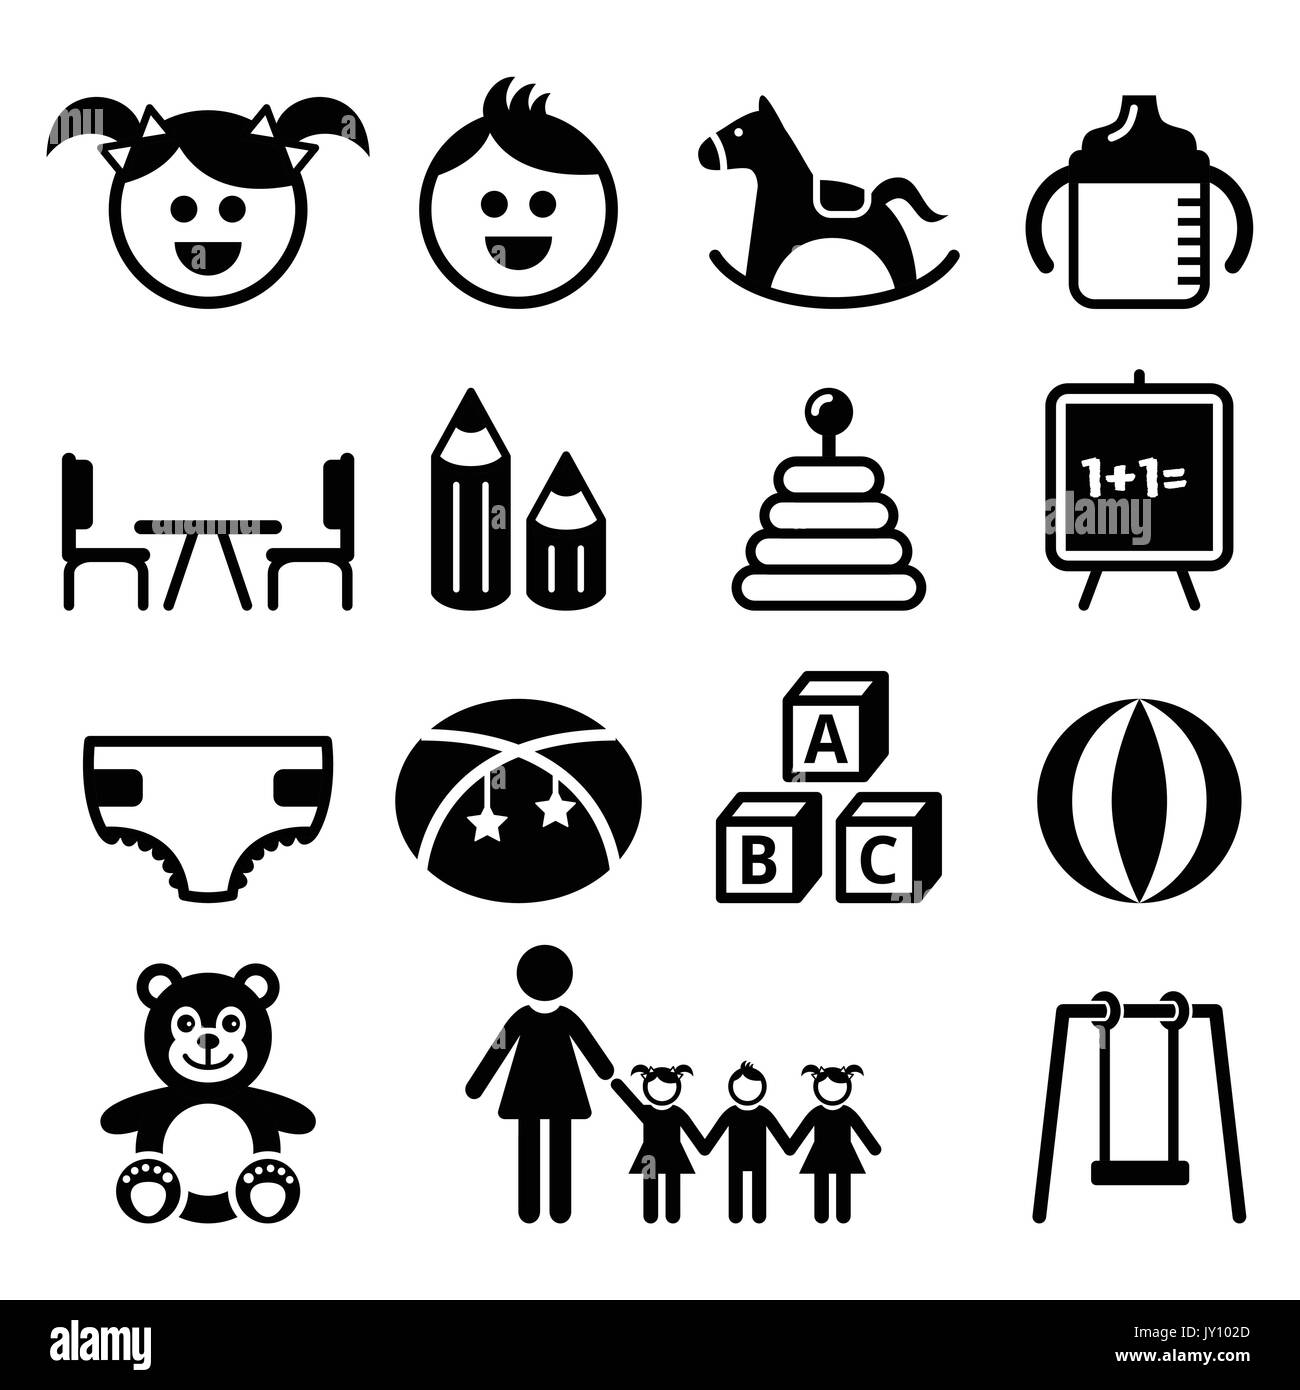 Kindergarten, nursery, preschool icons set    Babies and kids in creche or kindergarten vector icons set isolated on white Stock Vector